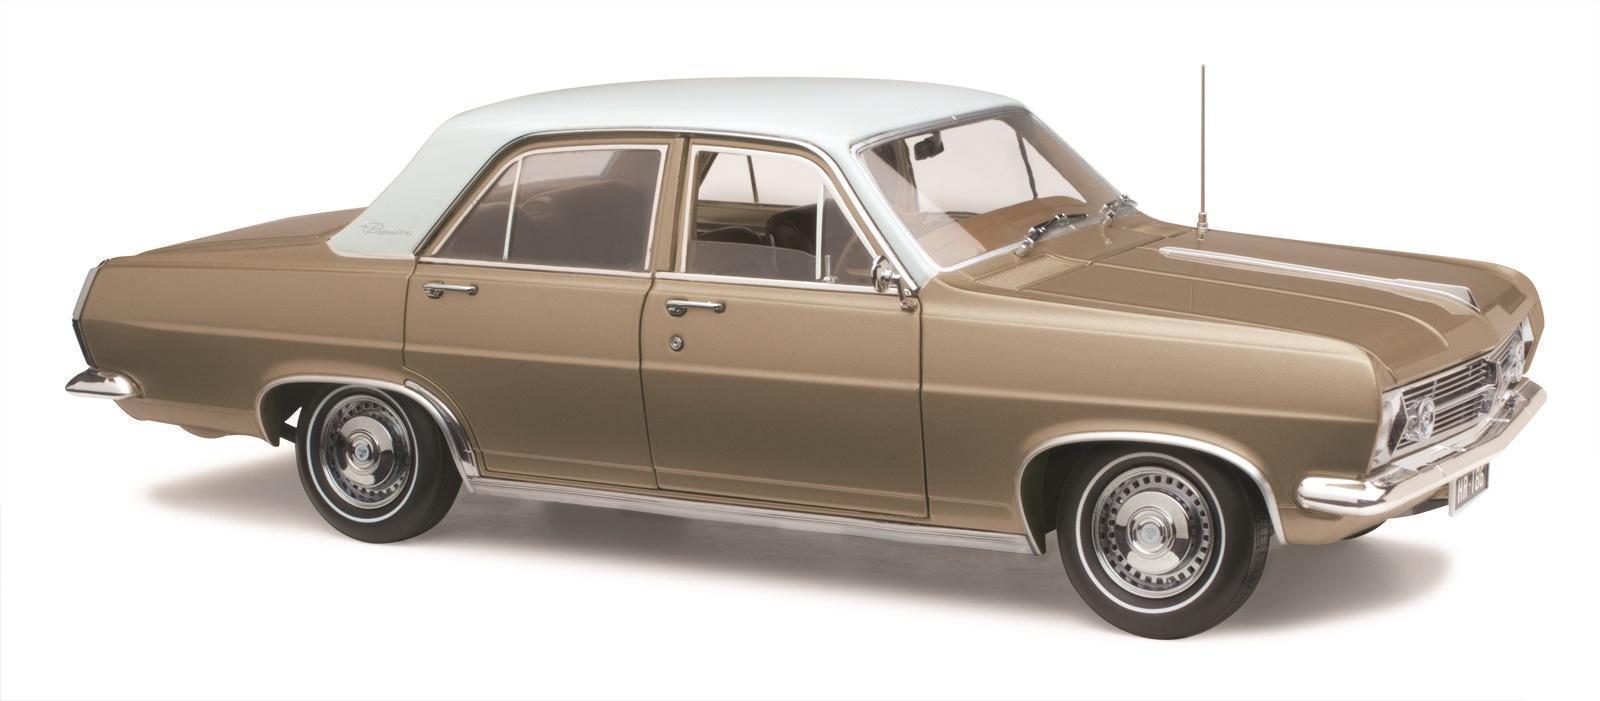 PRE ORDER - 1966 Holden HR Premier Sedan Landale Gold Metallic 50 Year Anniversary Edition Die Cast Model Car 1:18 (FULL PRICE - $259.00)